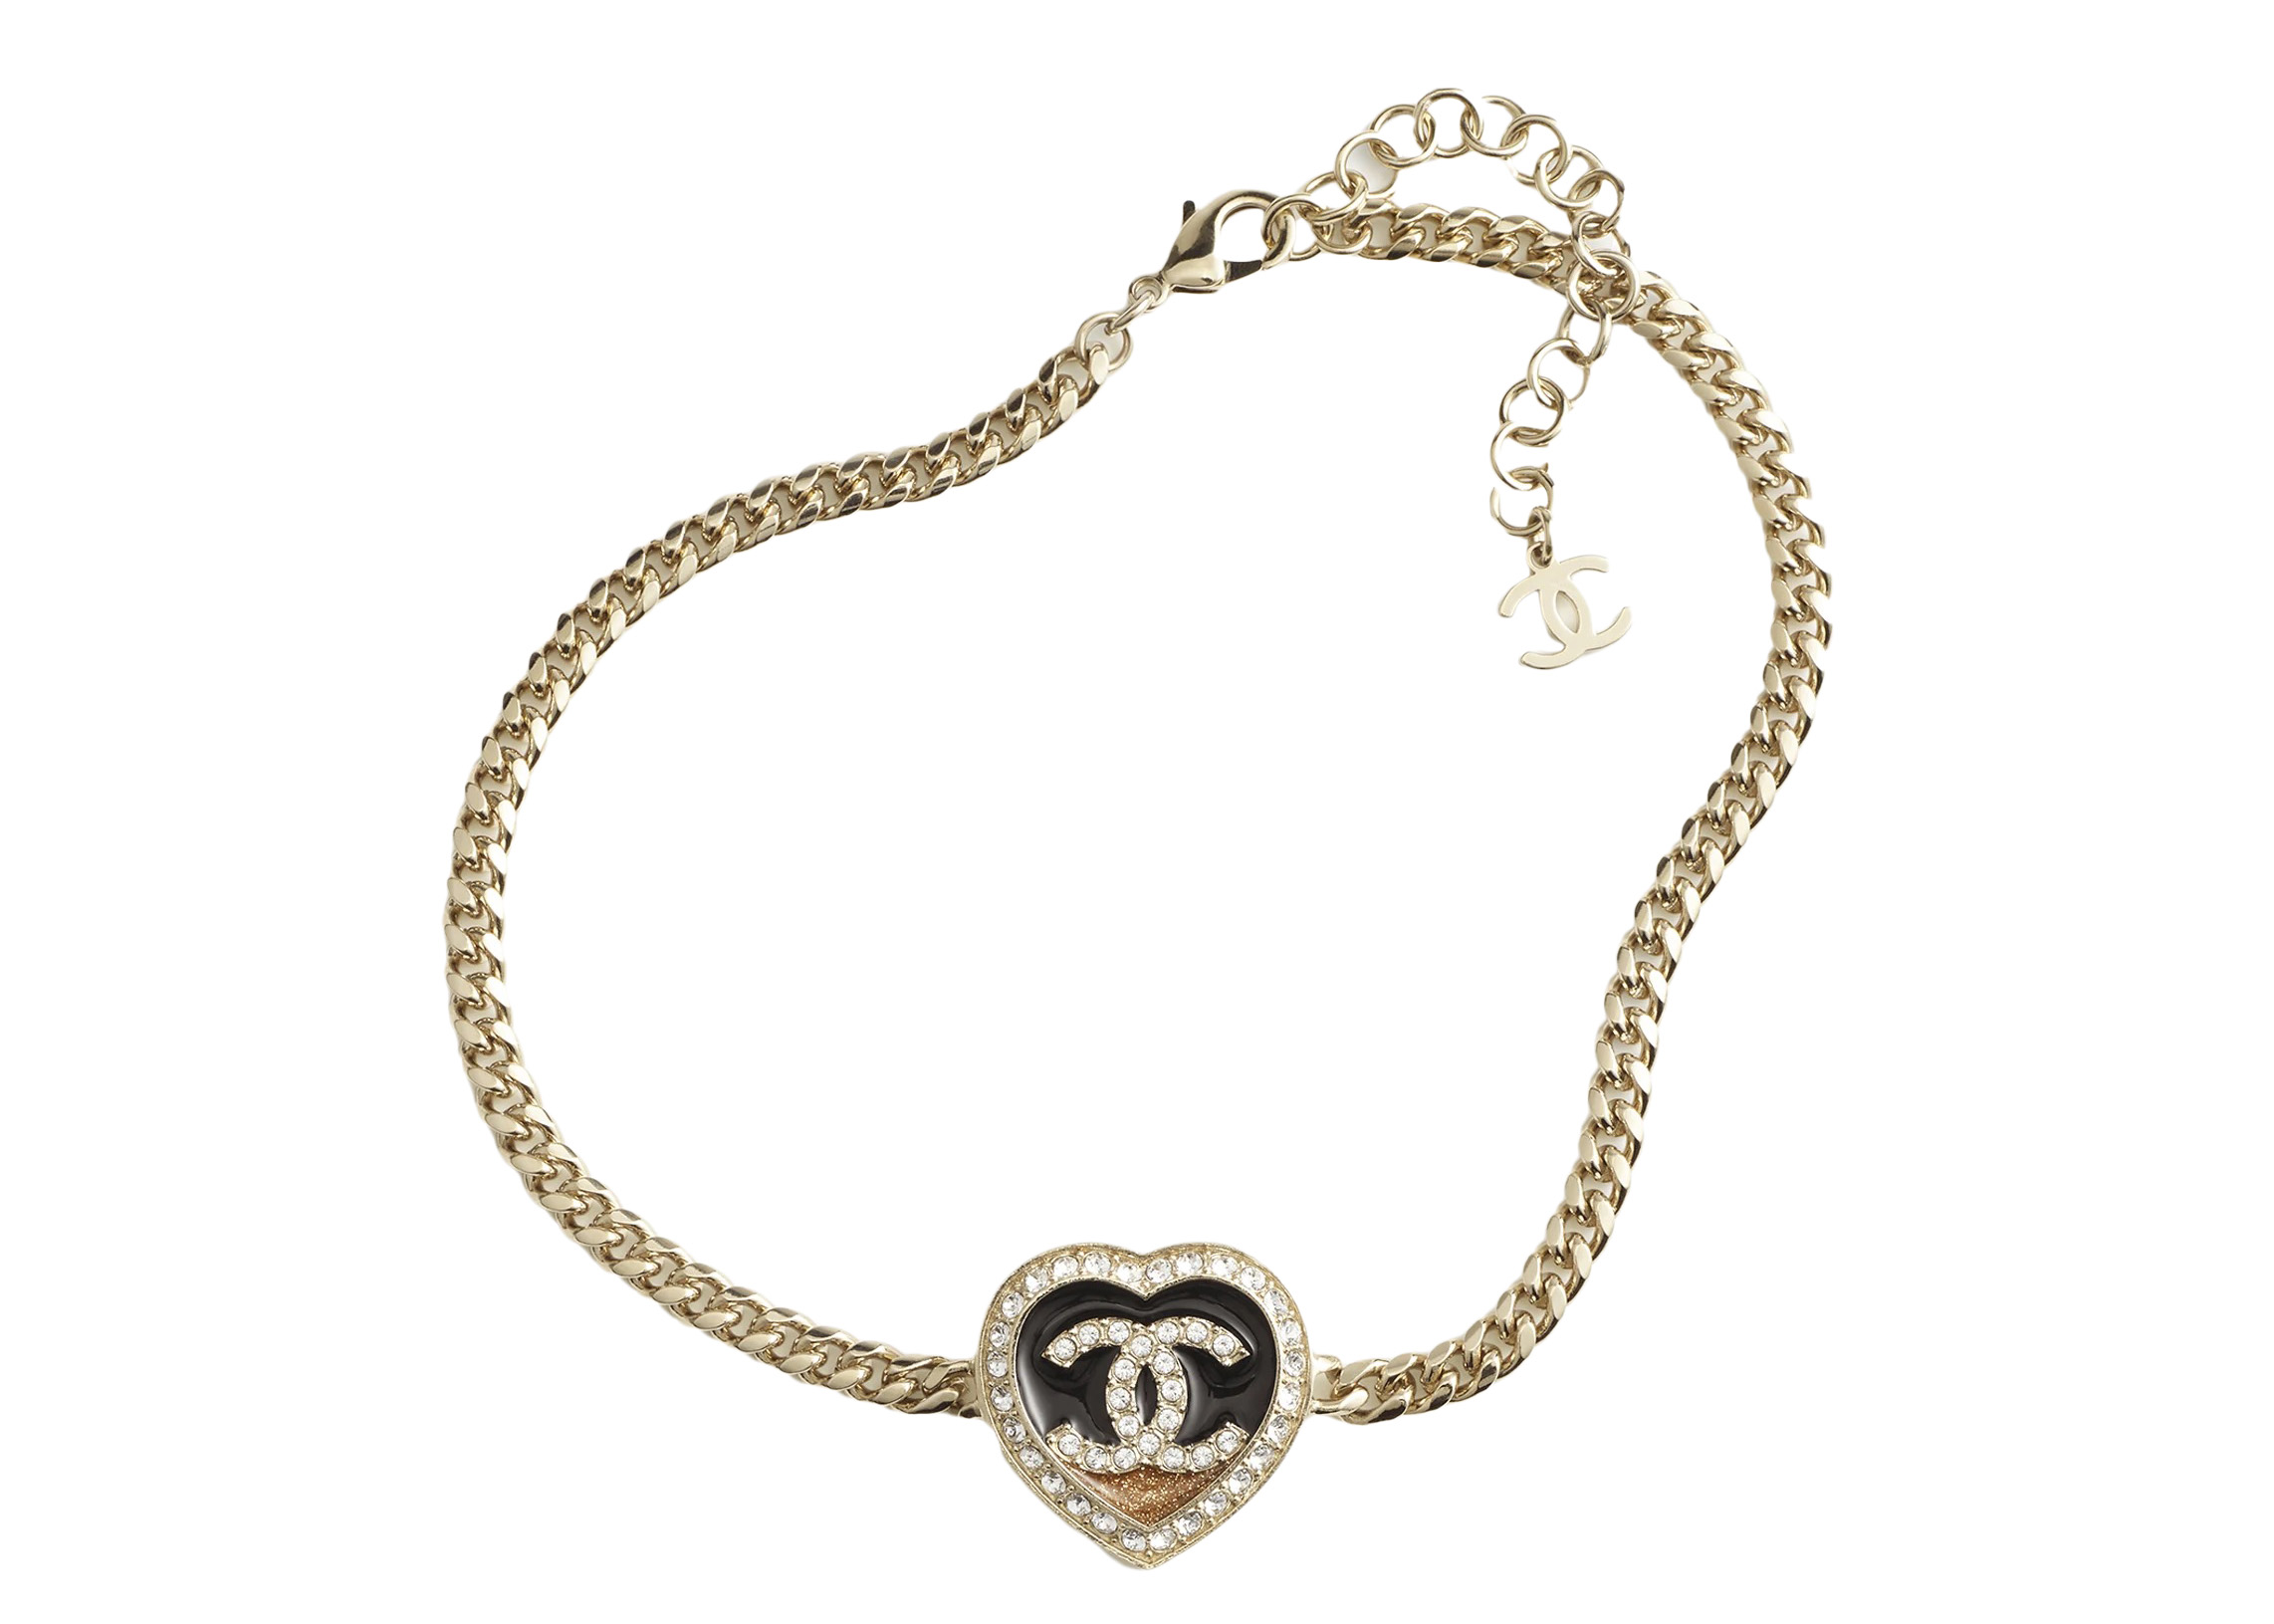 Accessories | Silver 999 Necklace Juice Wrld With Chain | Poshmark